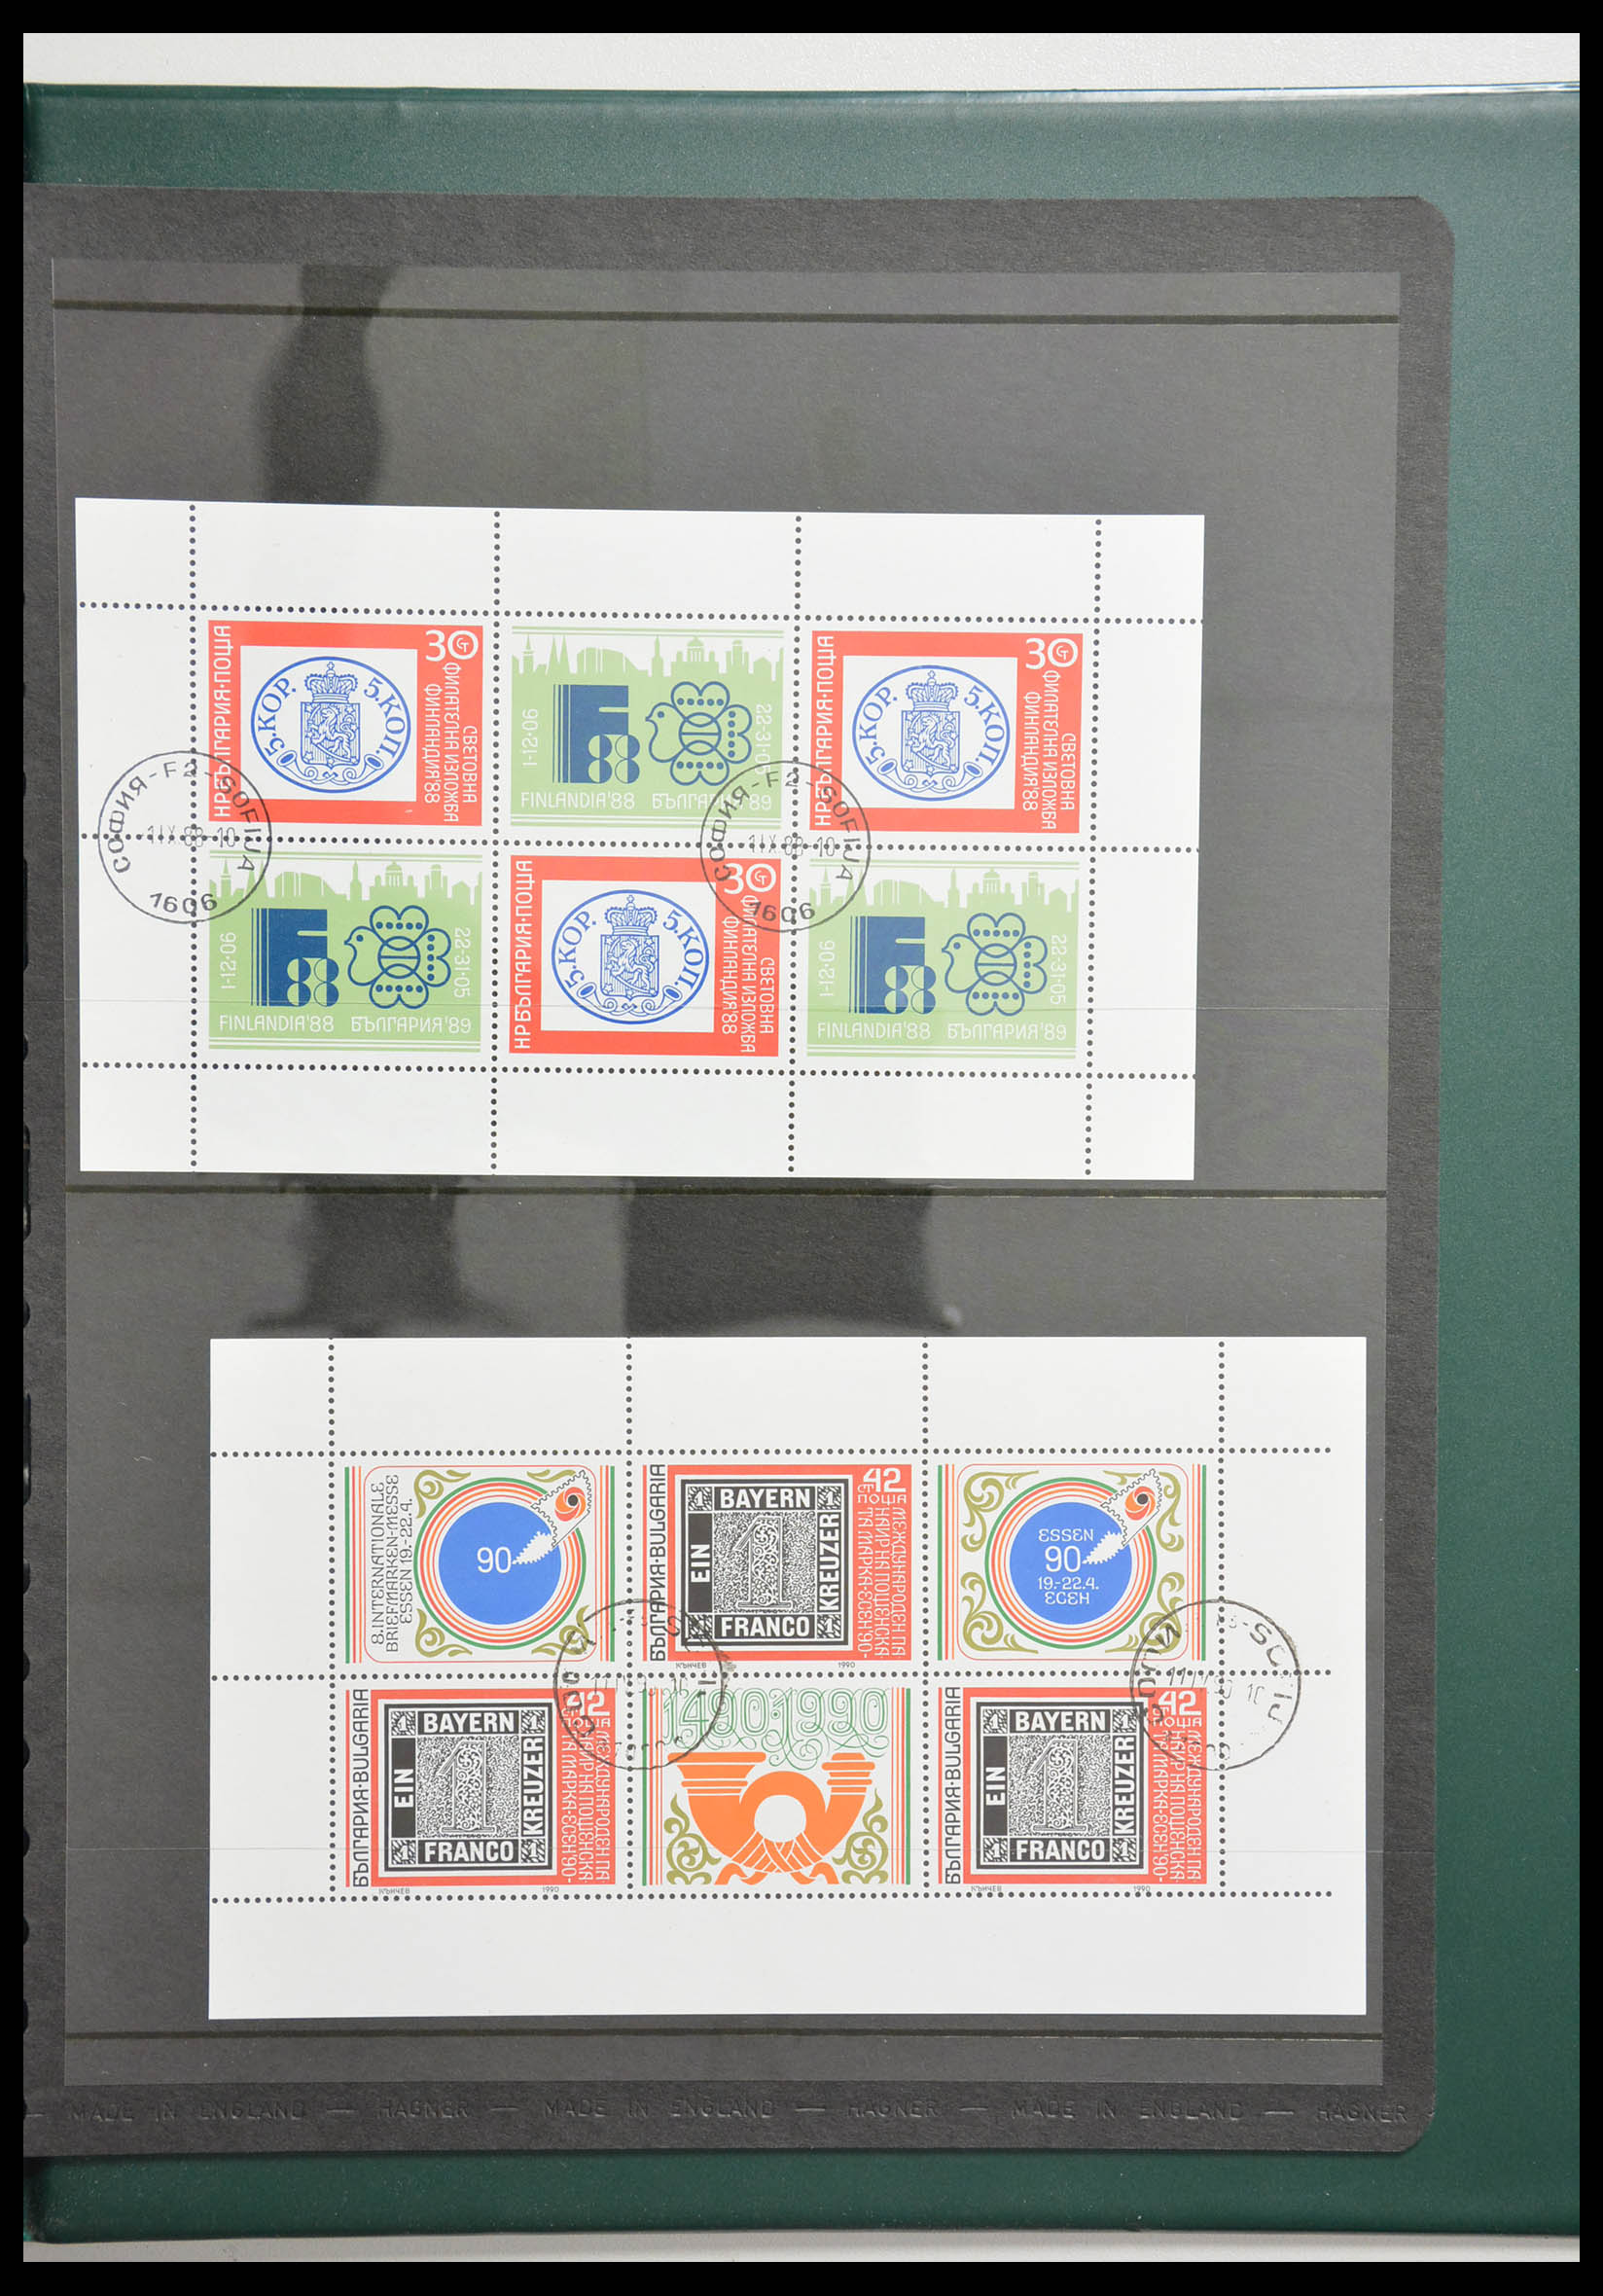 28337 092 - 28337 Postzegel op postzegel 1840-2001.